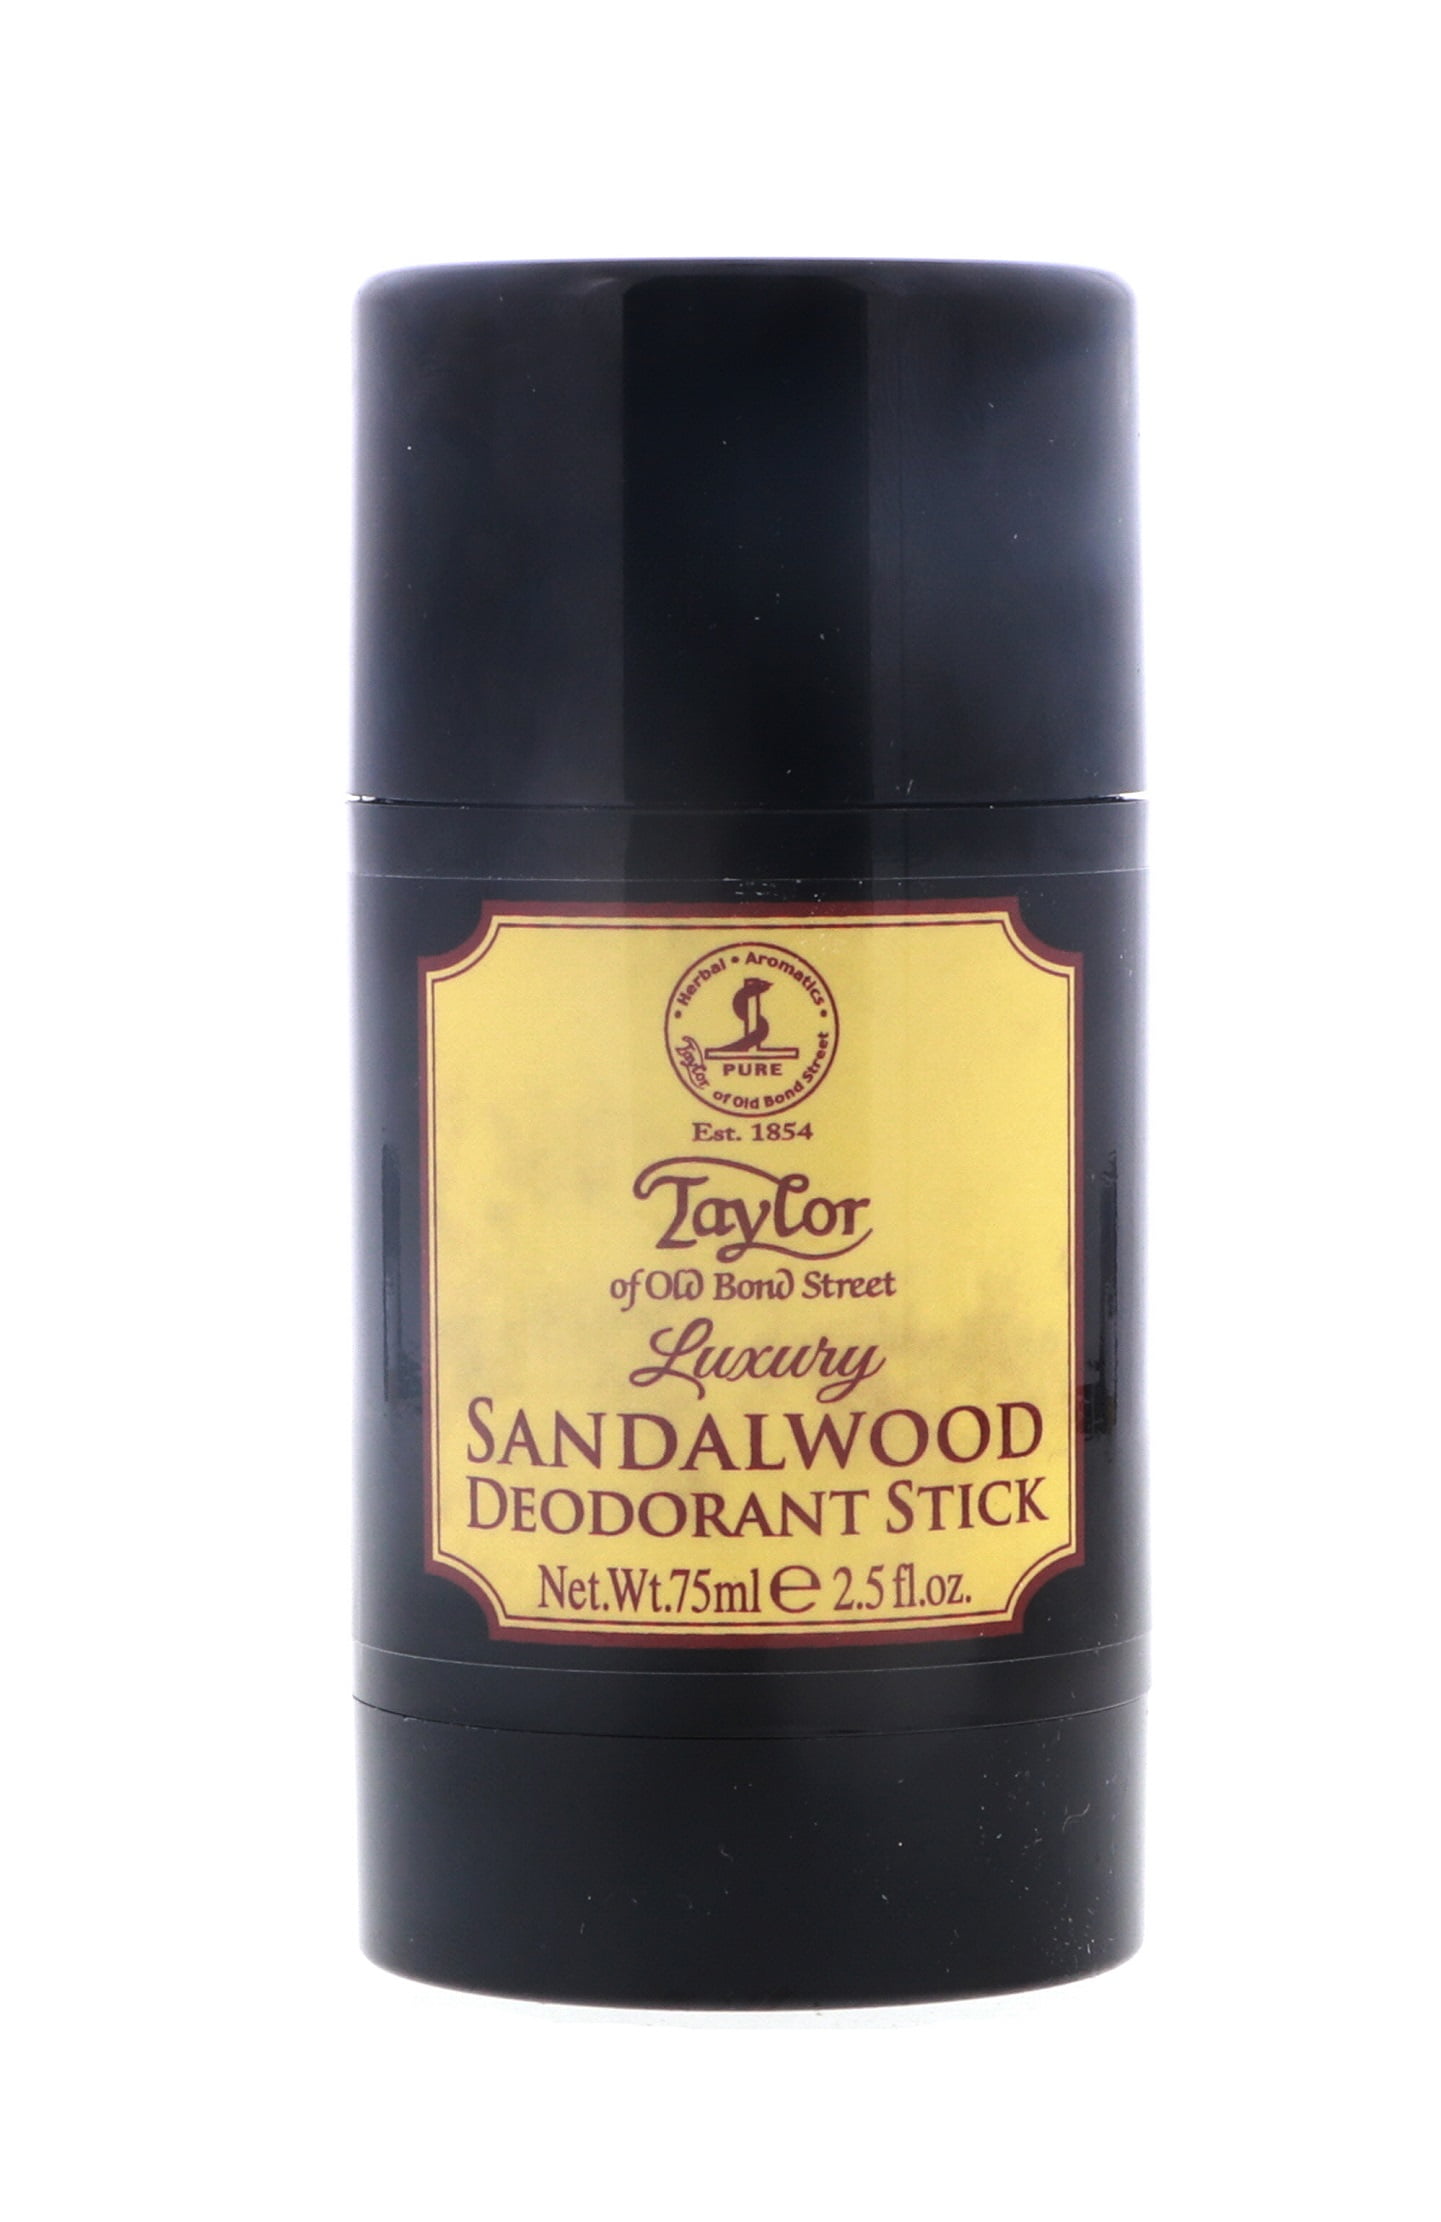 Sandalwood Deodorant Stick by Taylor of Old Bond Street (2.5oz Deo Stick)